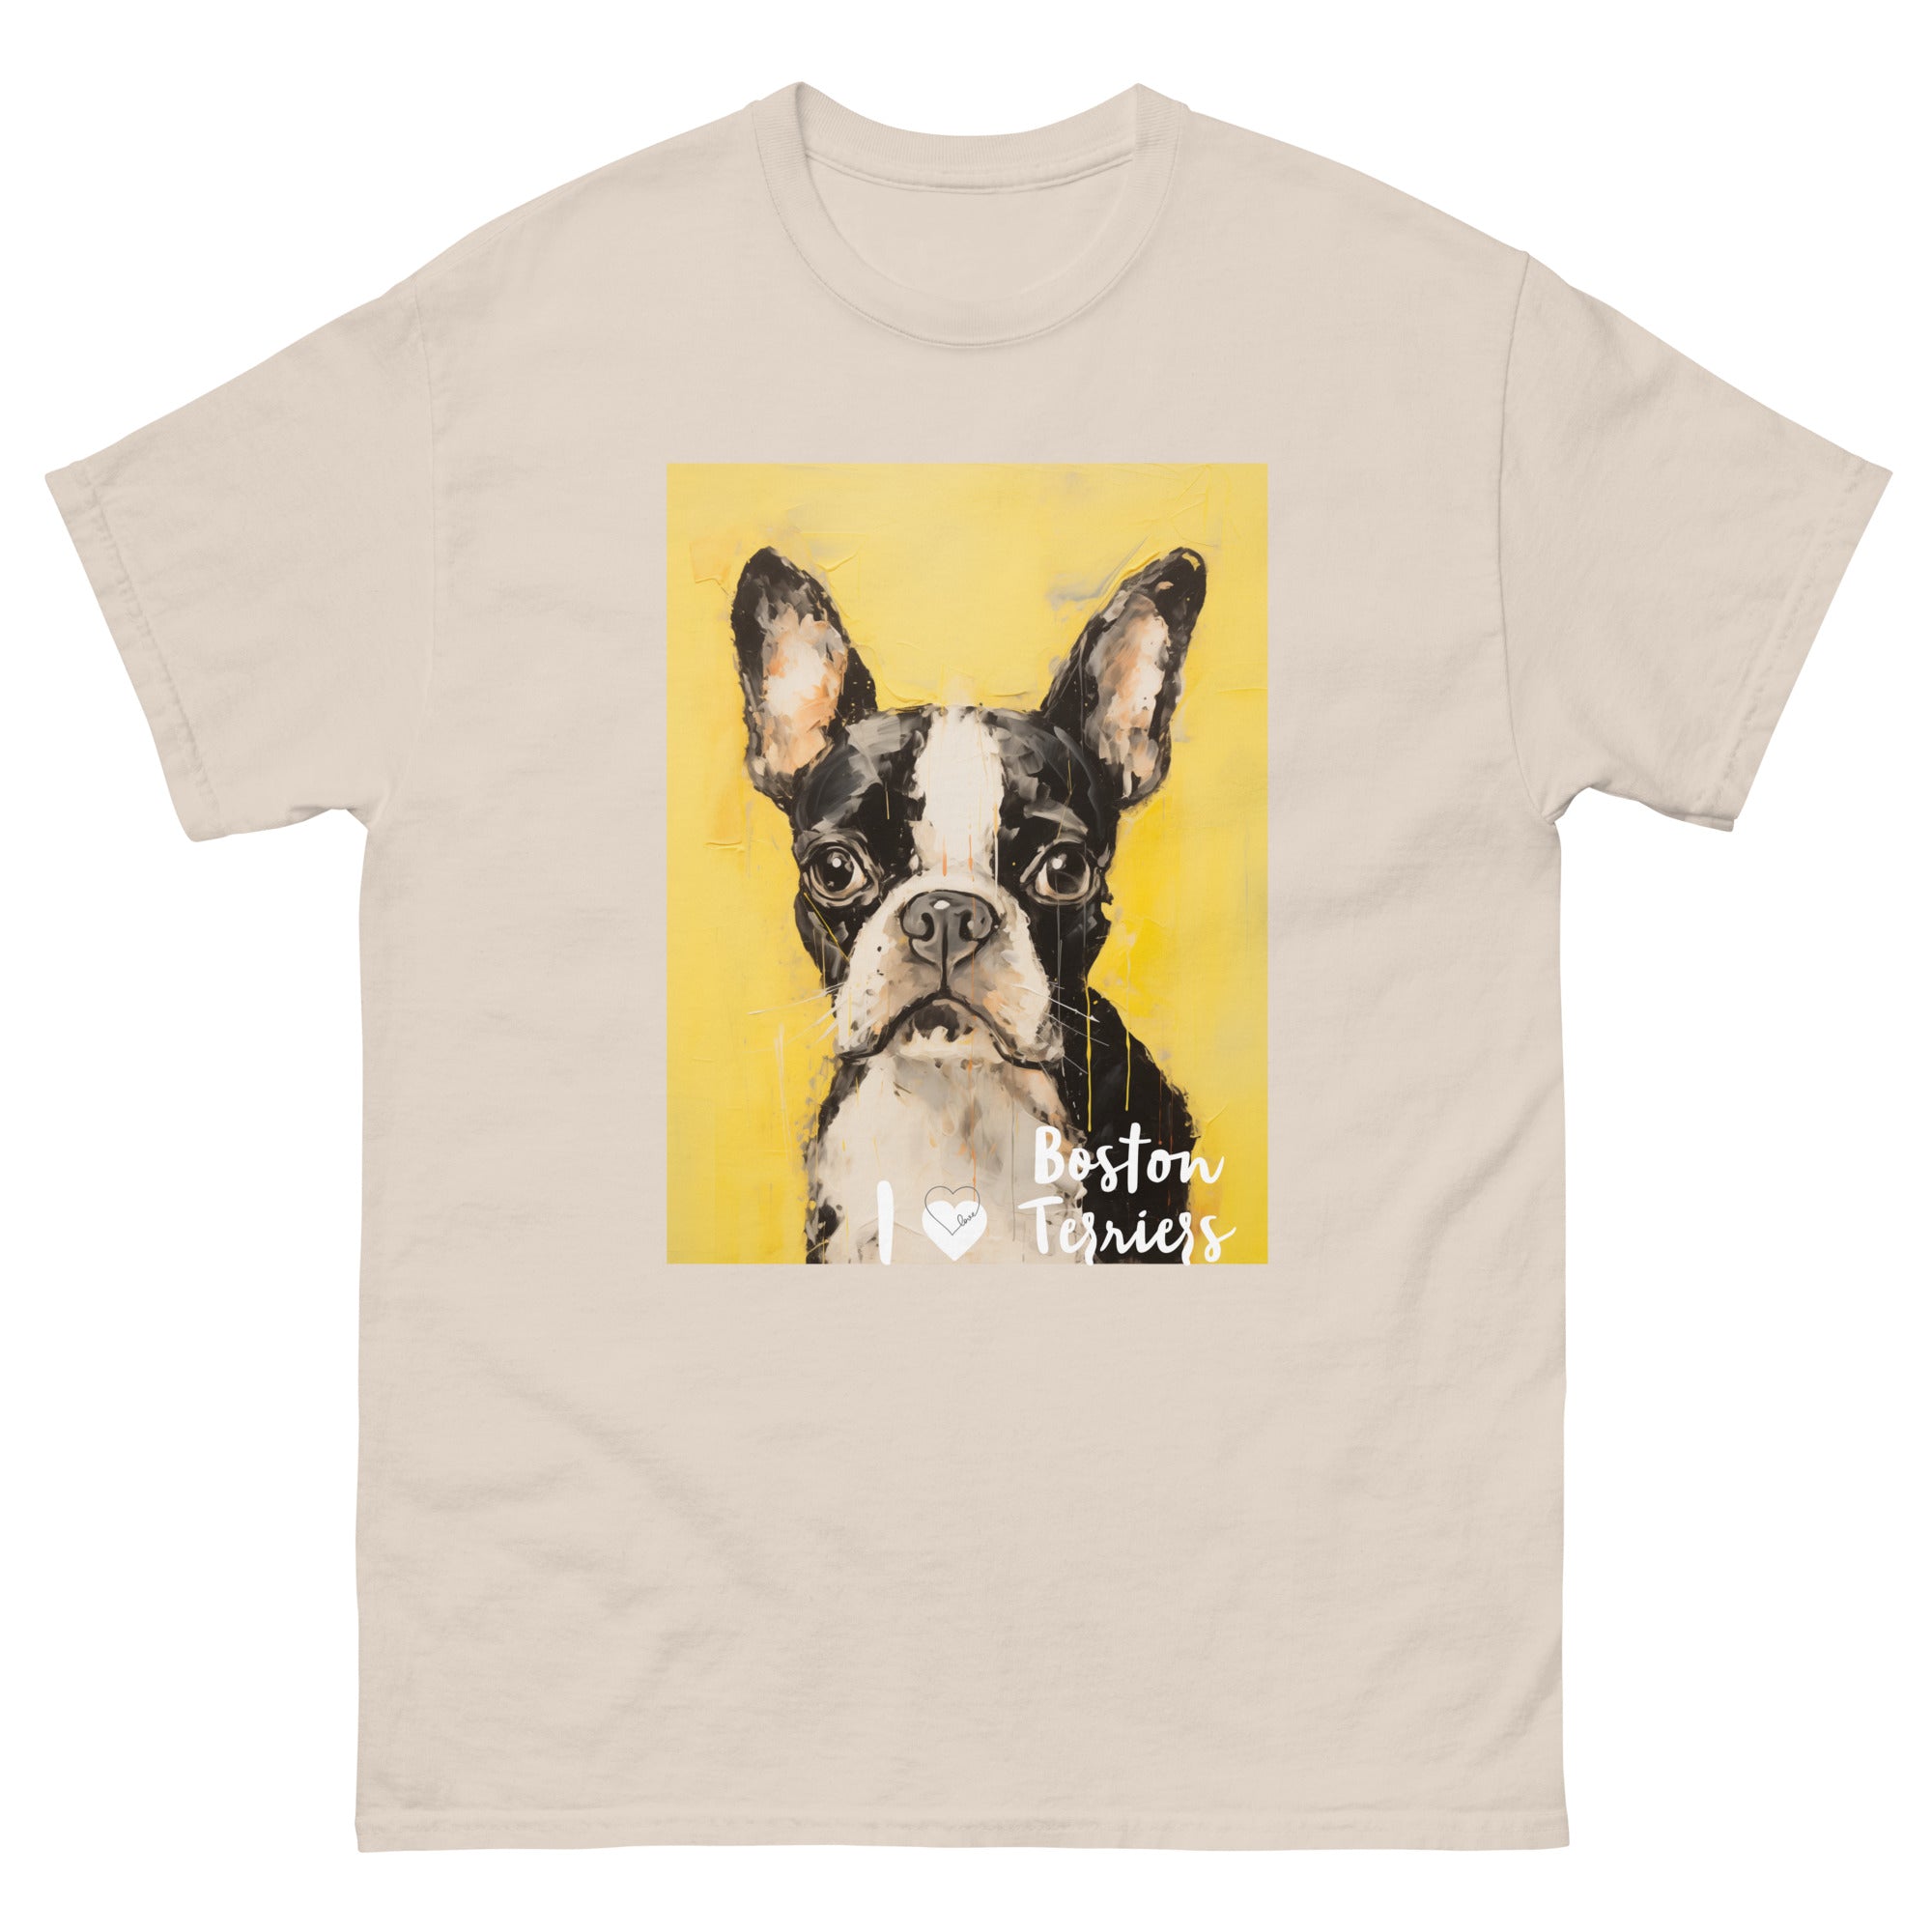 Men's classic tee - I ❤ DOGS - Boston Terrier